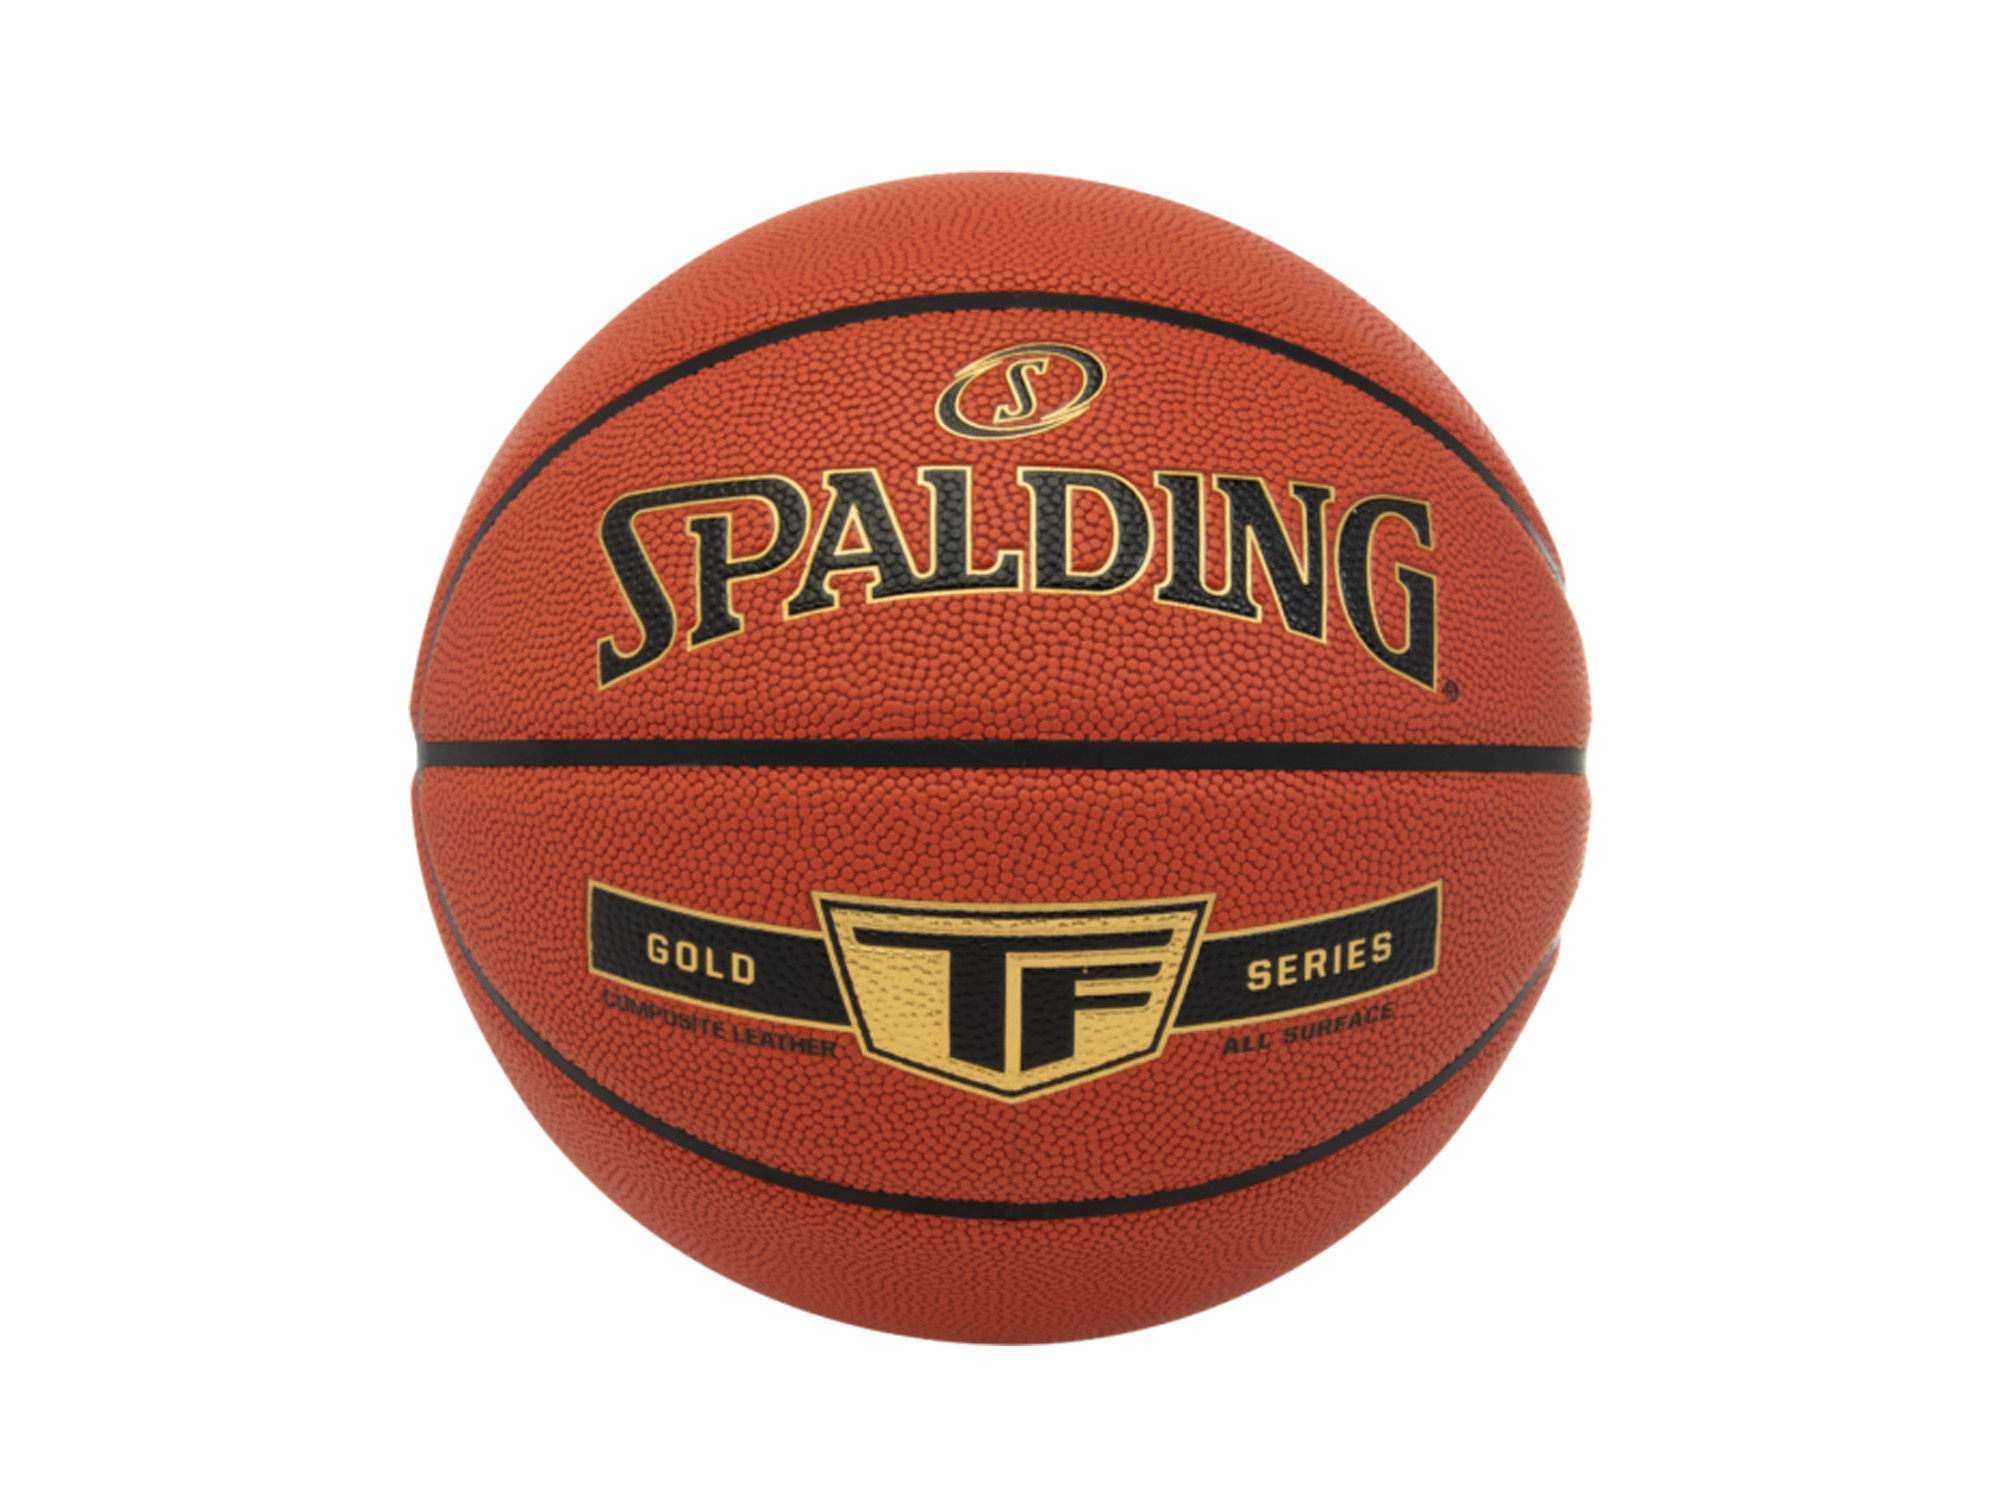 Spalding TF Gold Series Basketball